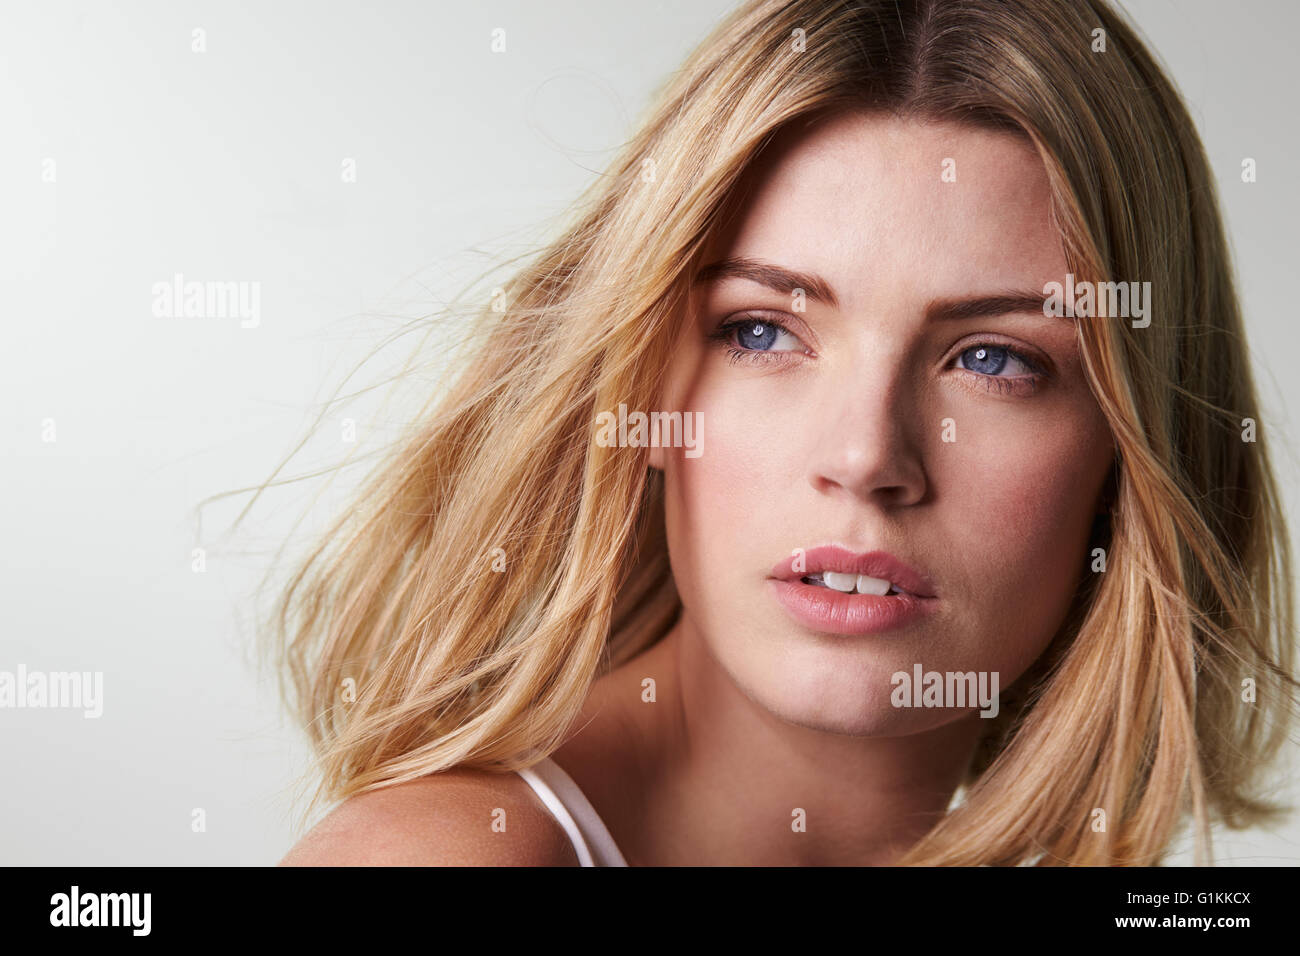 Blonde Frau wegsehen, Haar weht, close-up horizontal Stockfoto